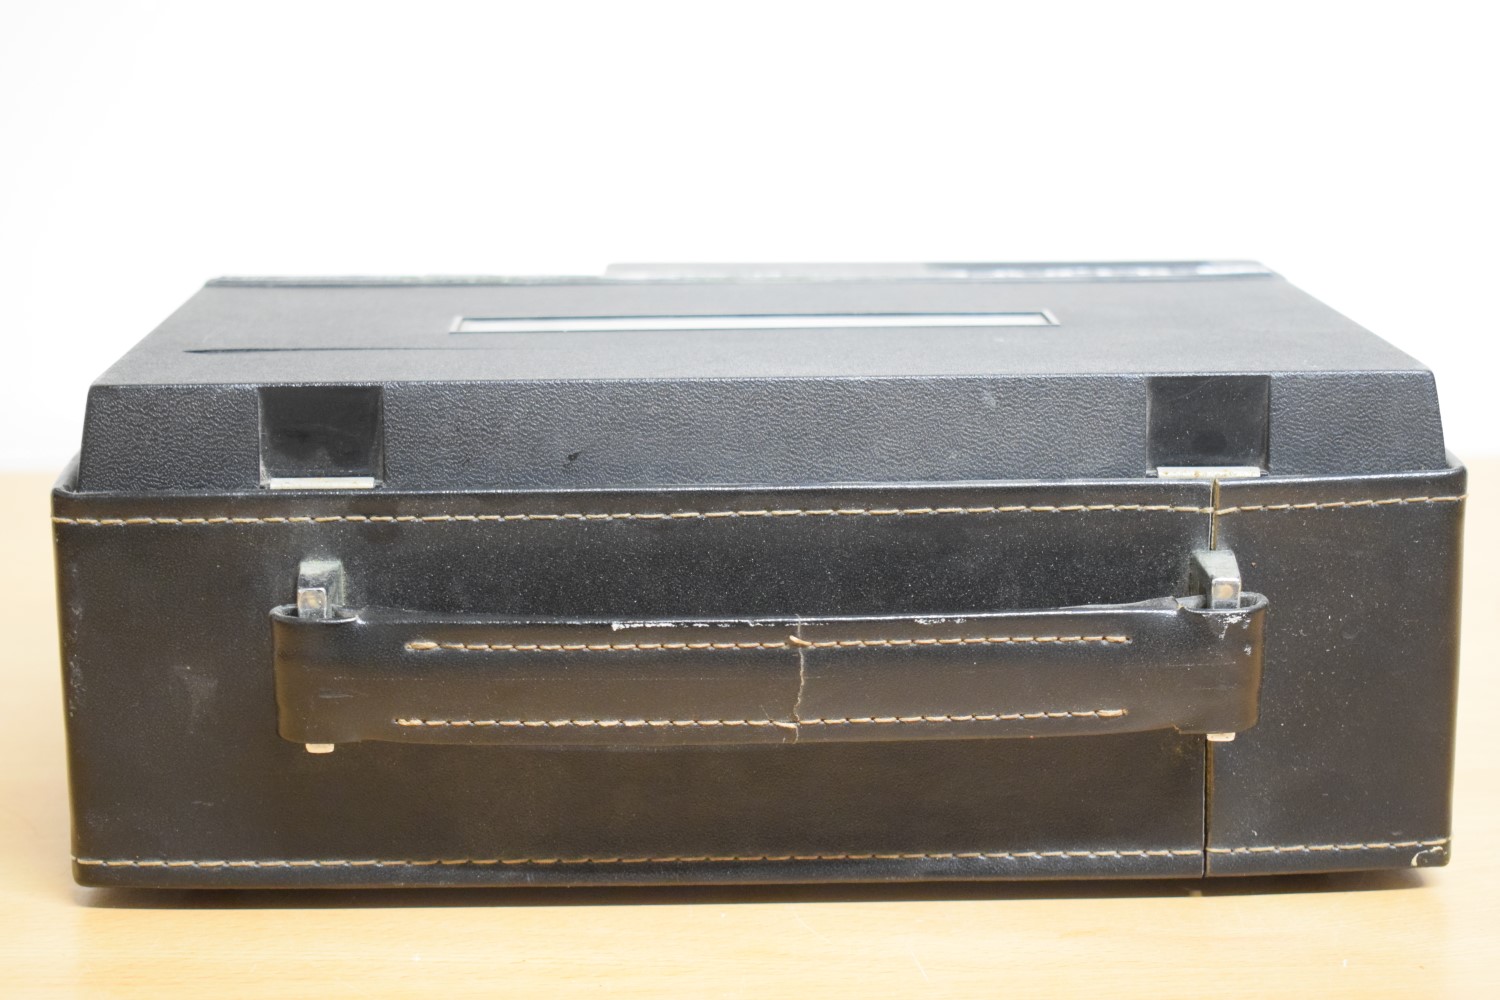 Miny Model TR-1001 Portable Tape Recorder